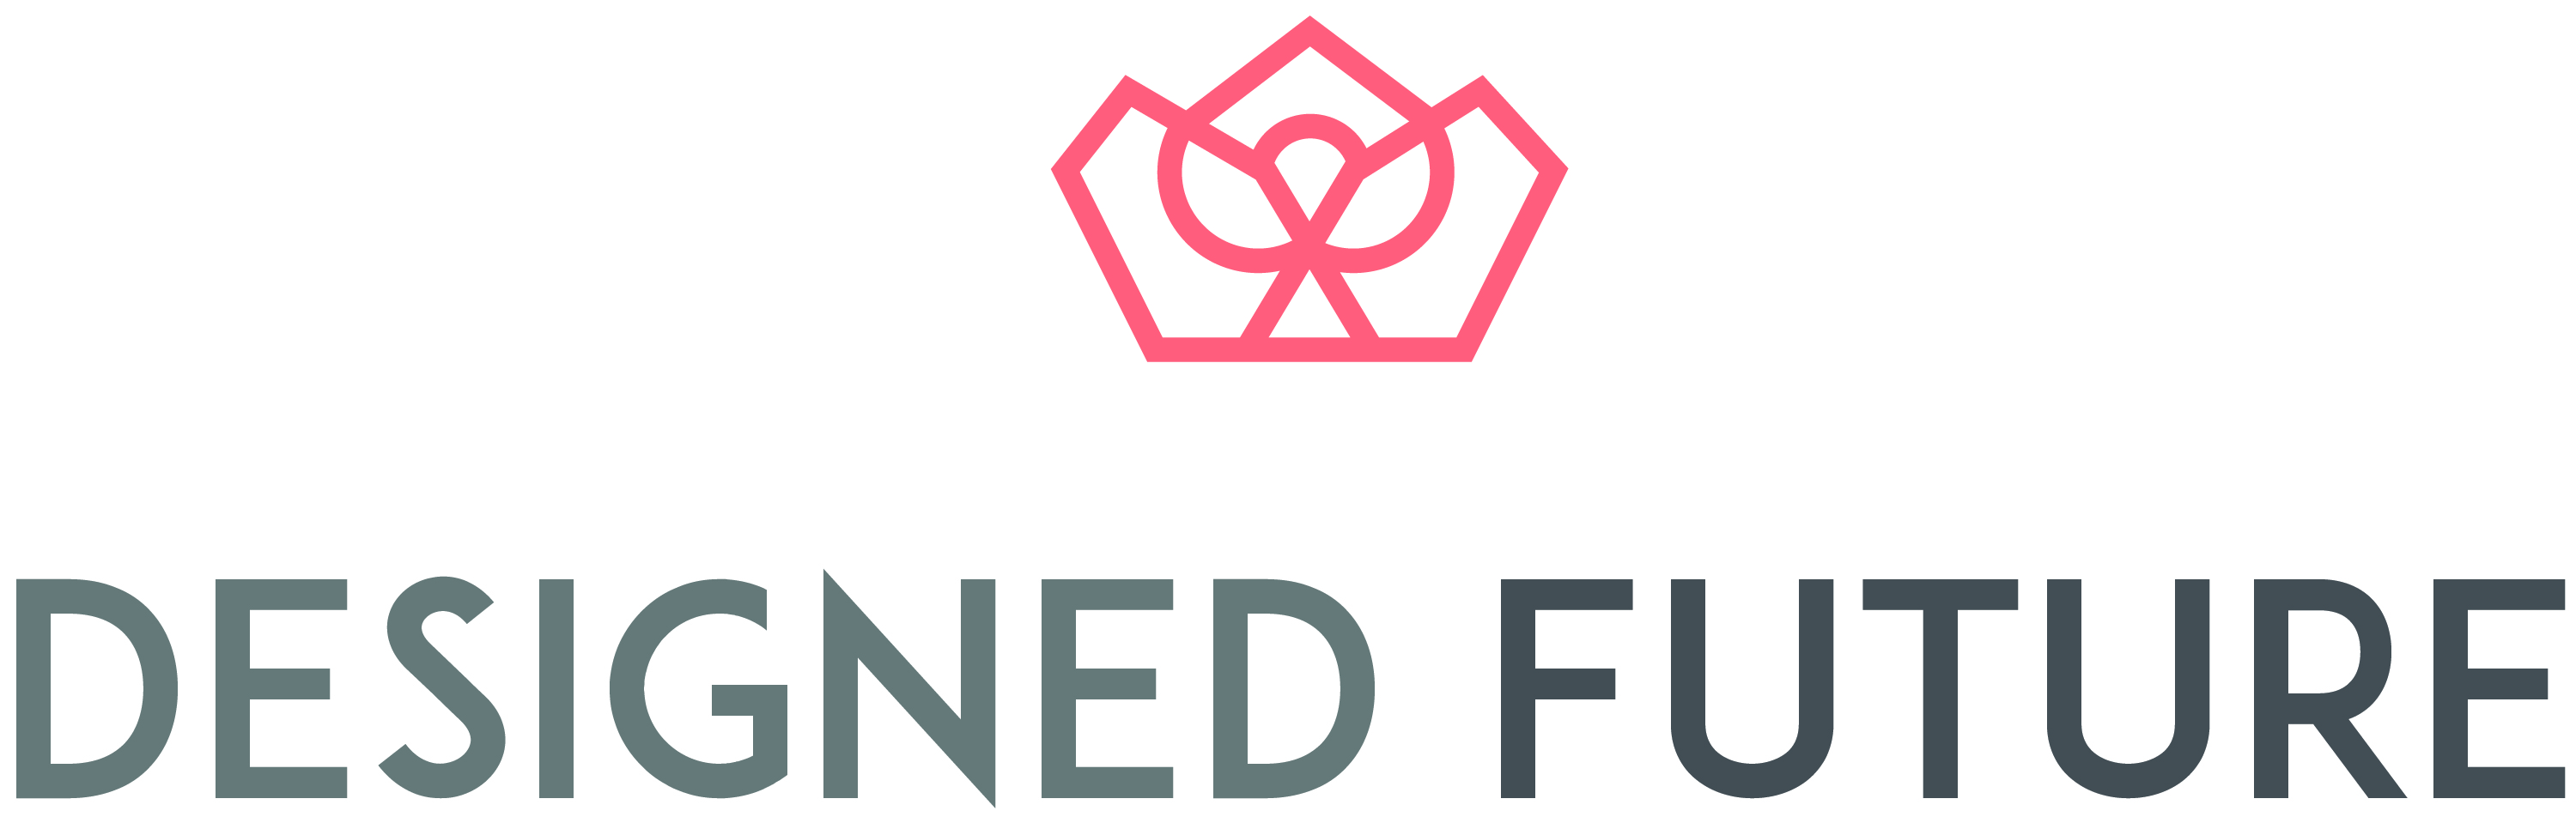 Designed Future logo